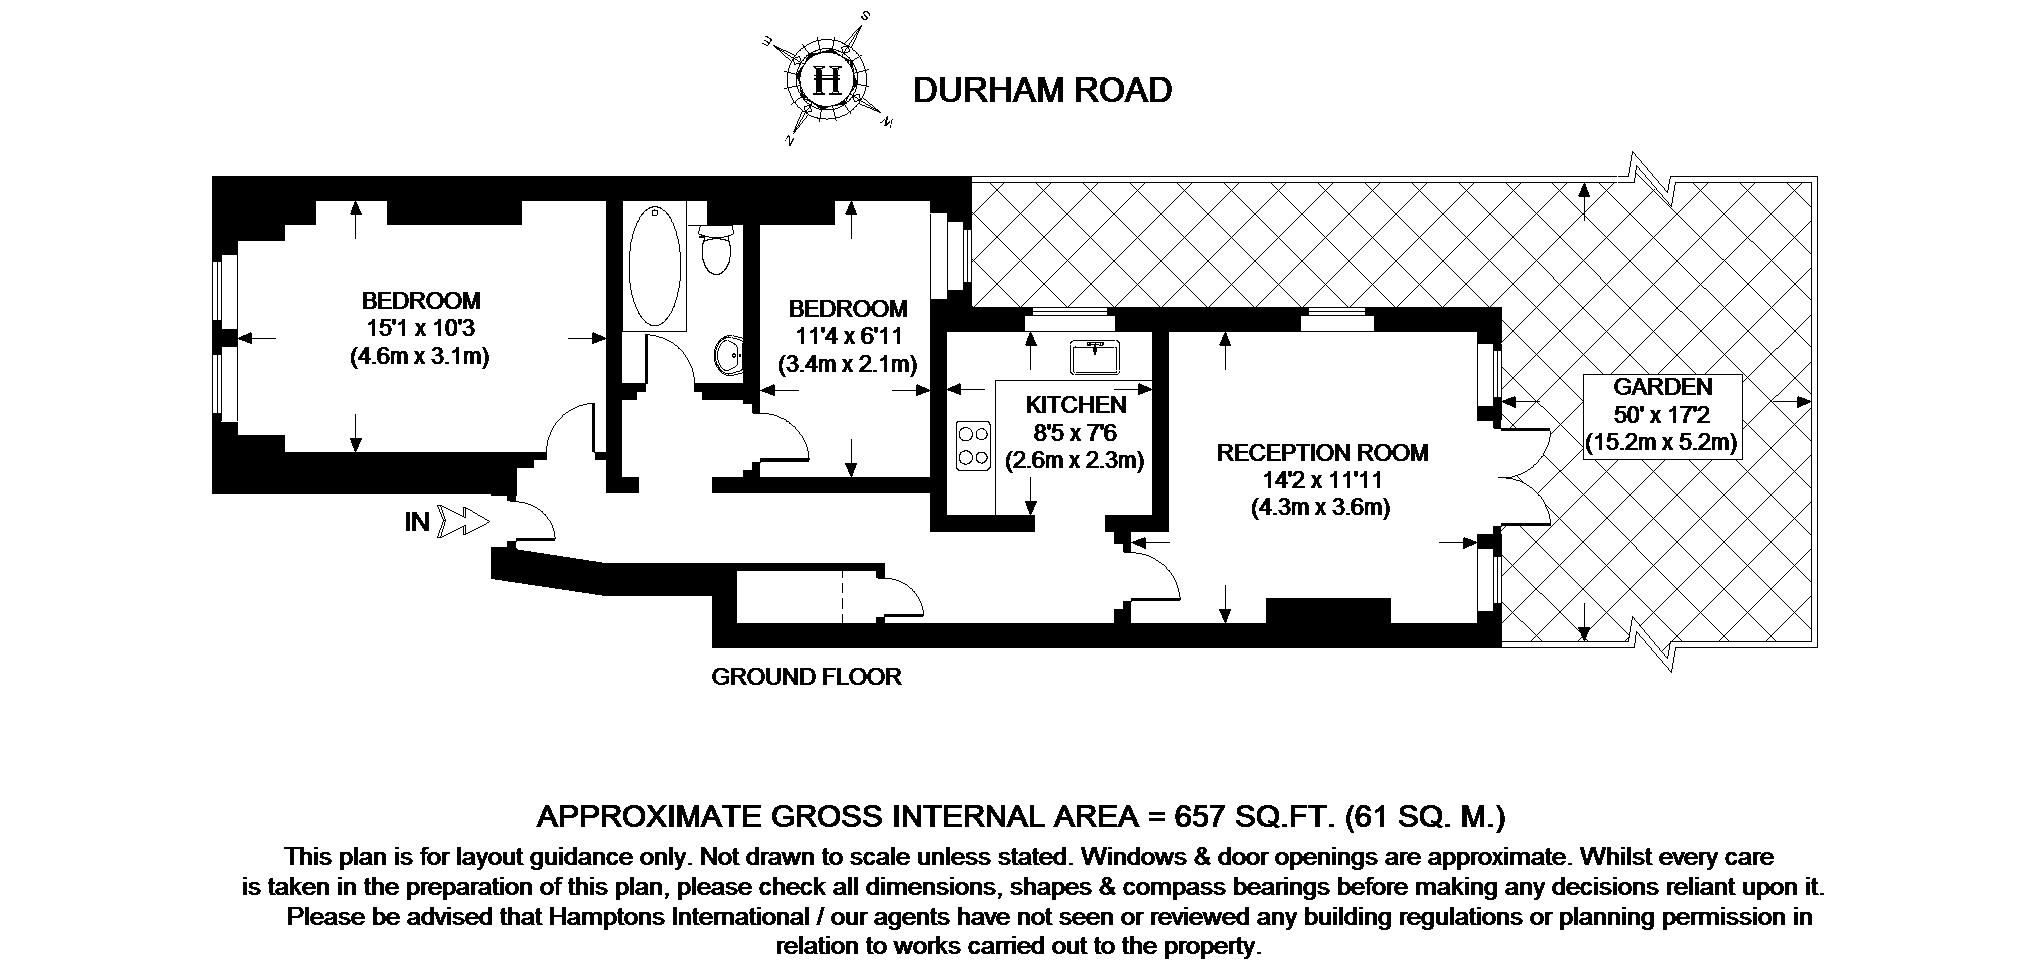 2 Bedrooms Flat to rent in Durham Road, London N2